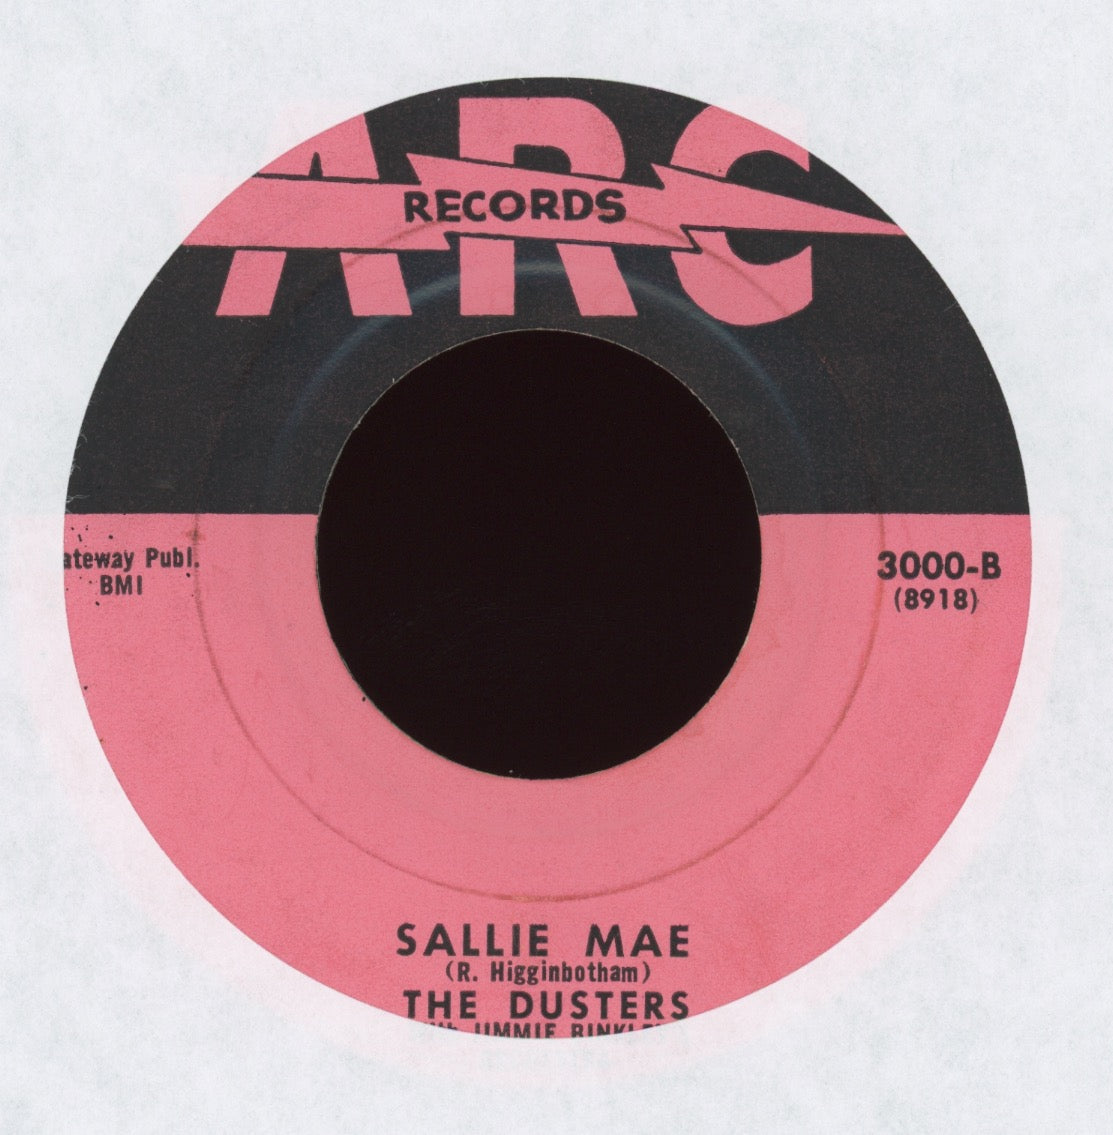 The Dusters - Sallie Mae on ARC